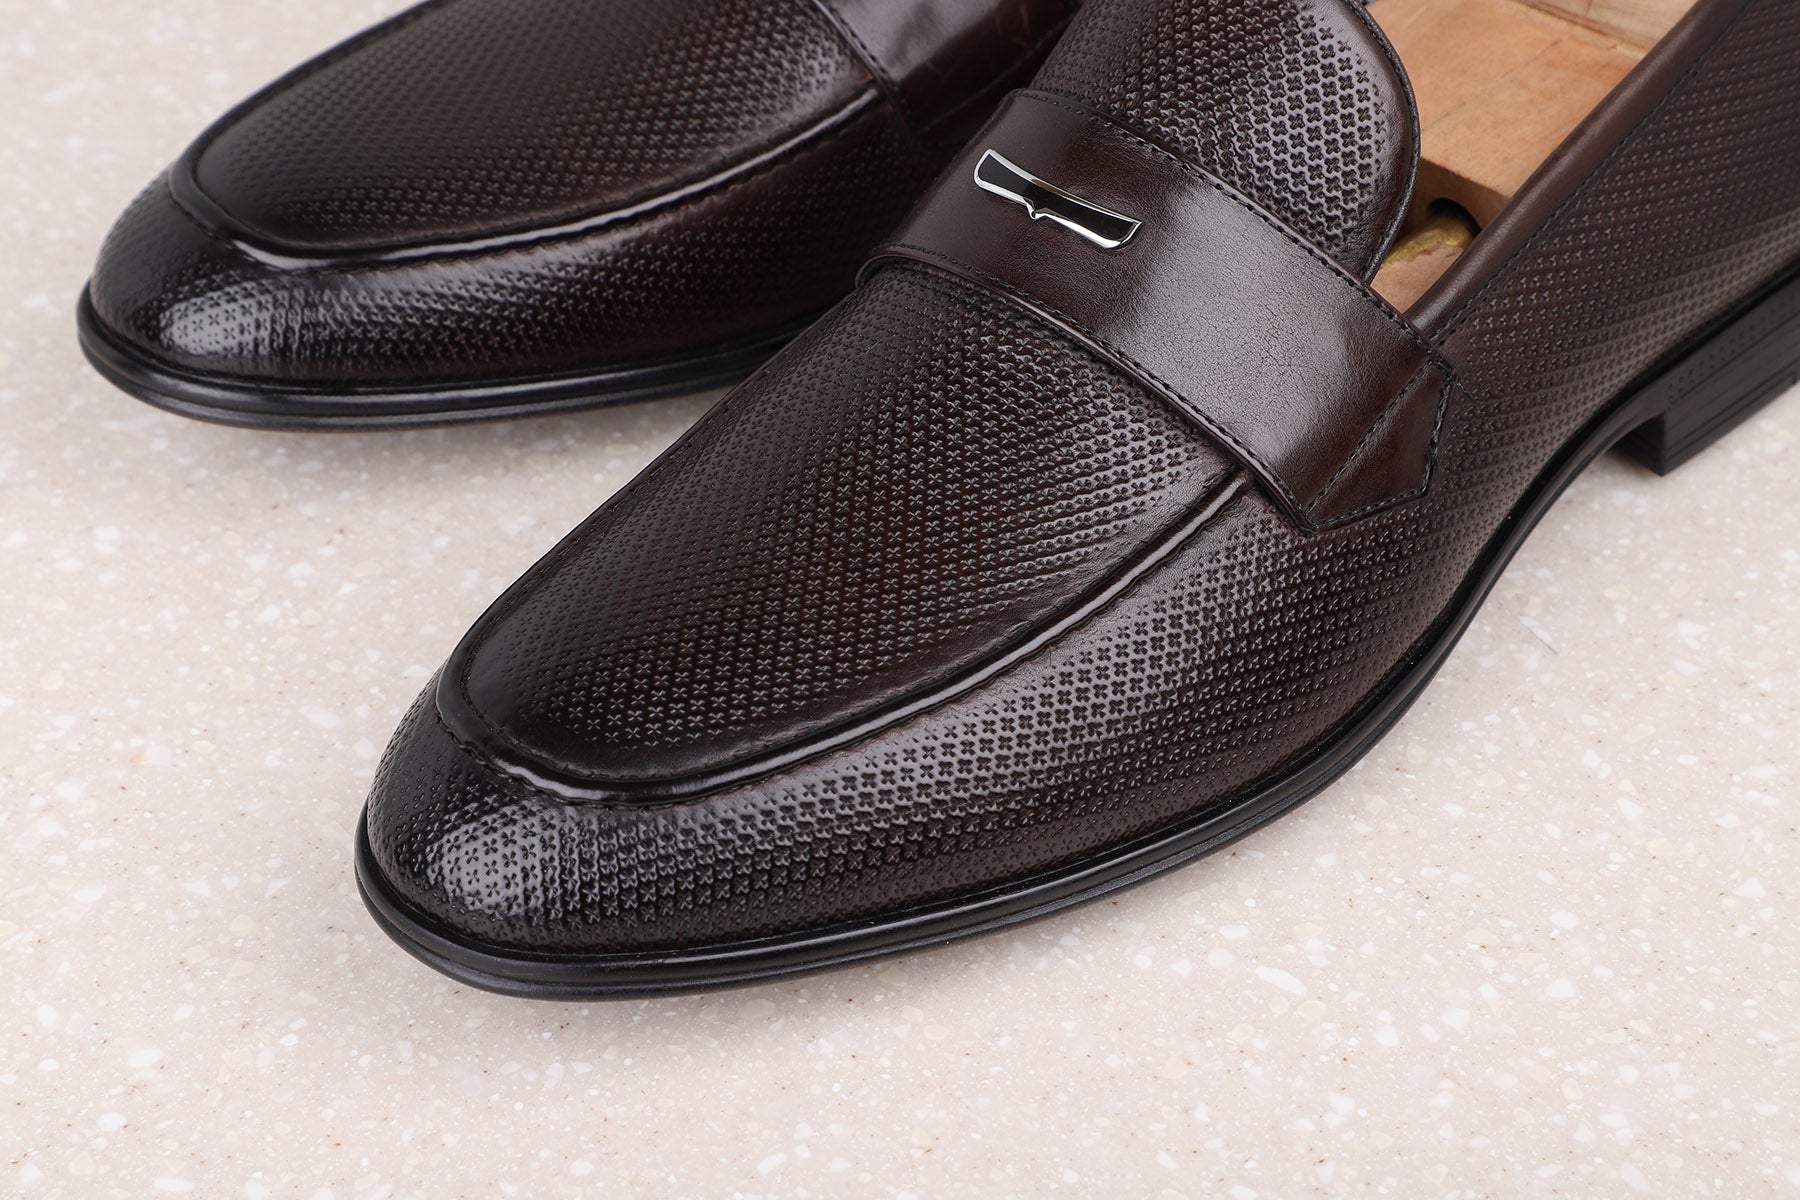 FORMAL SLIPPONS-COFFEE-Men's Formal Slipons-Inc5 Shoes